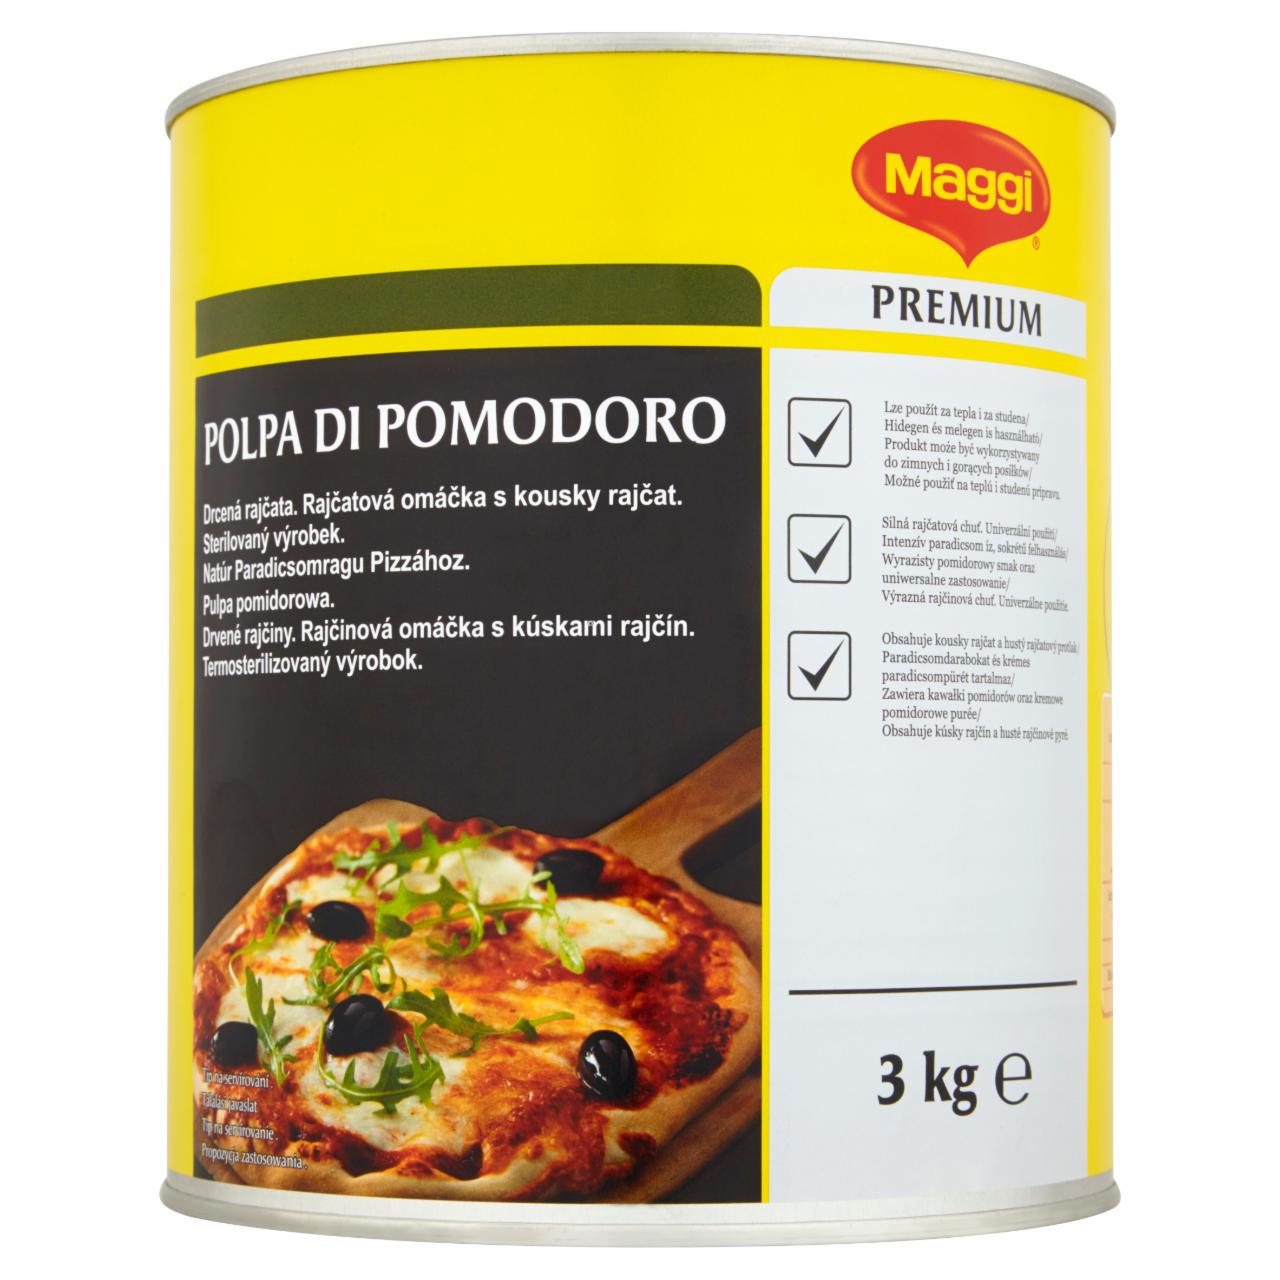 Zdjęcia - Maggi Pulpa pomidorowa 3 kg